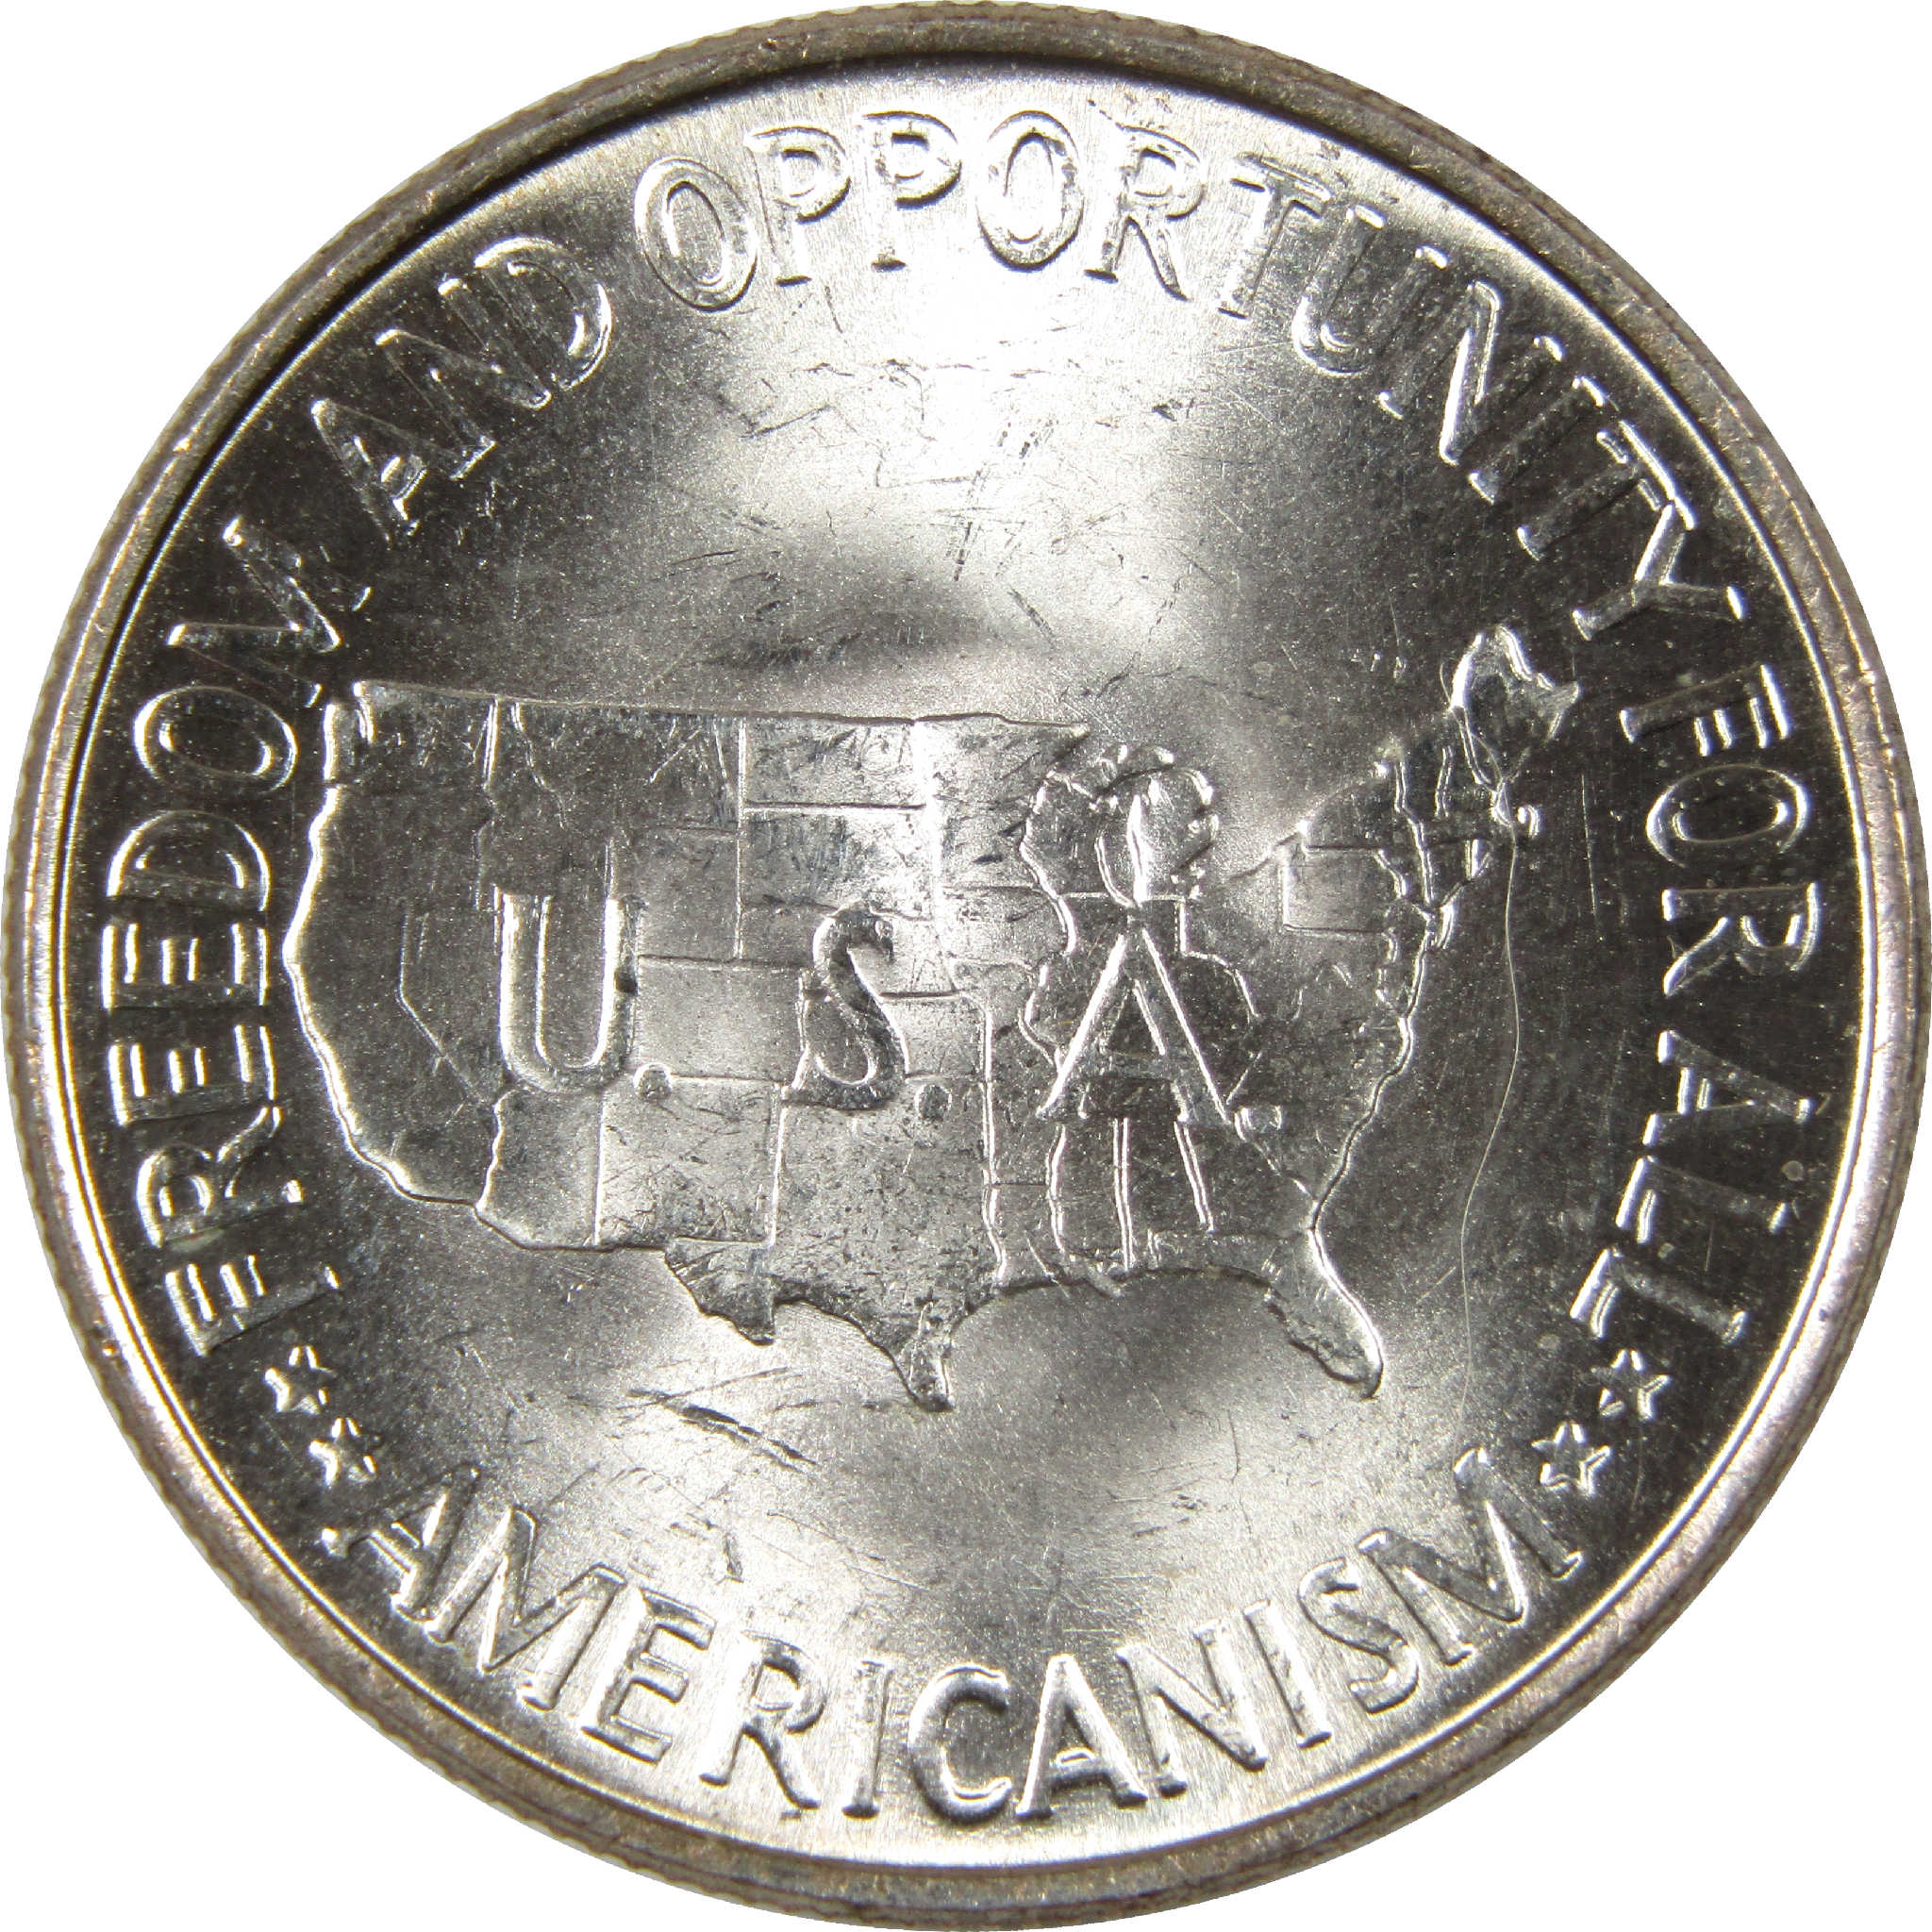 Washington-Carver Half Dollar 1952 Uncirculated Silver 50c Coin